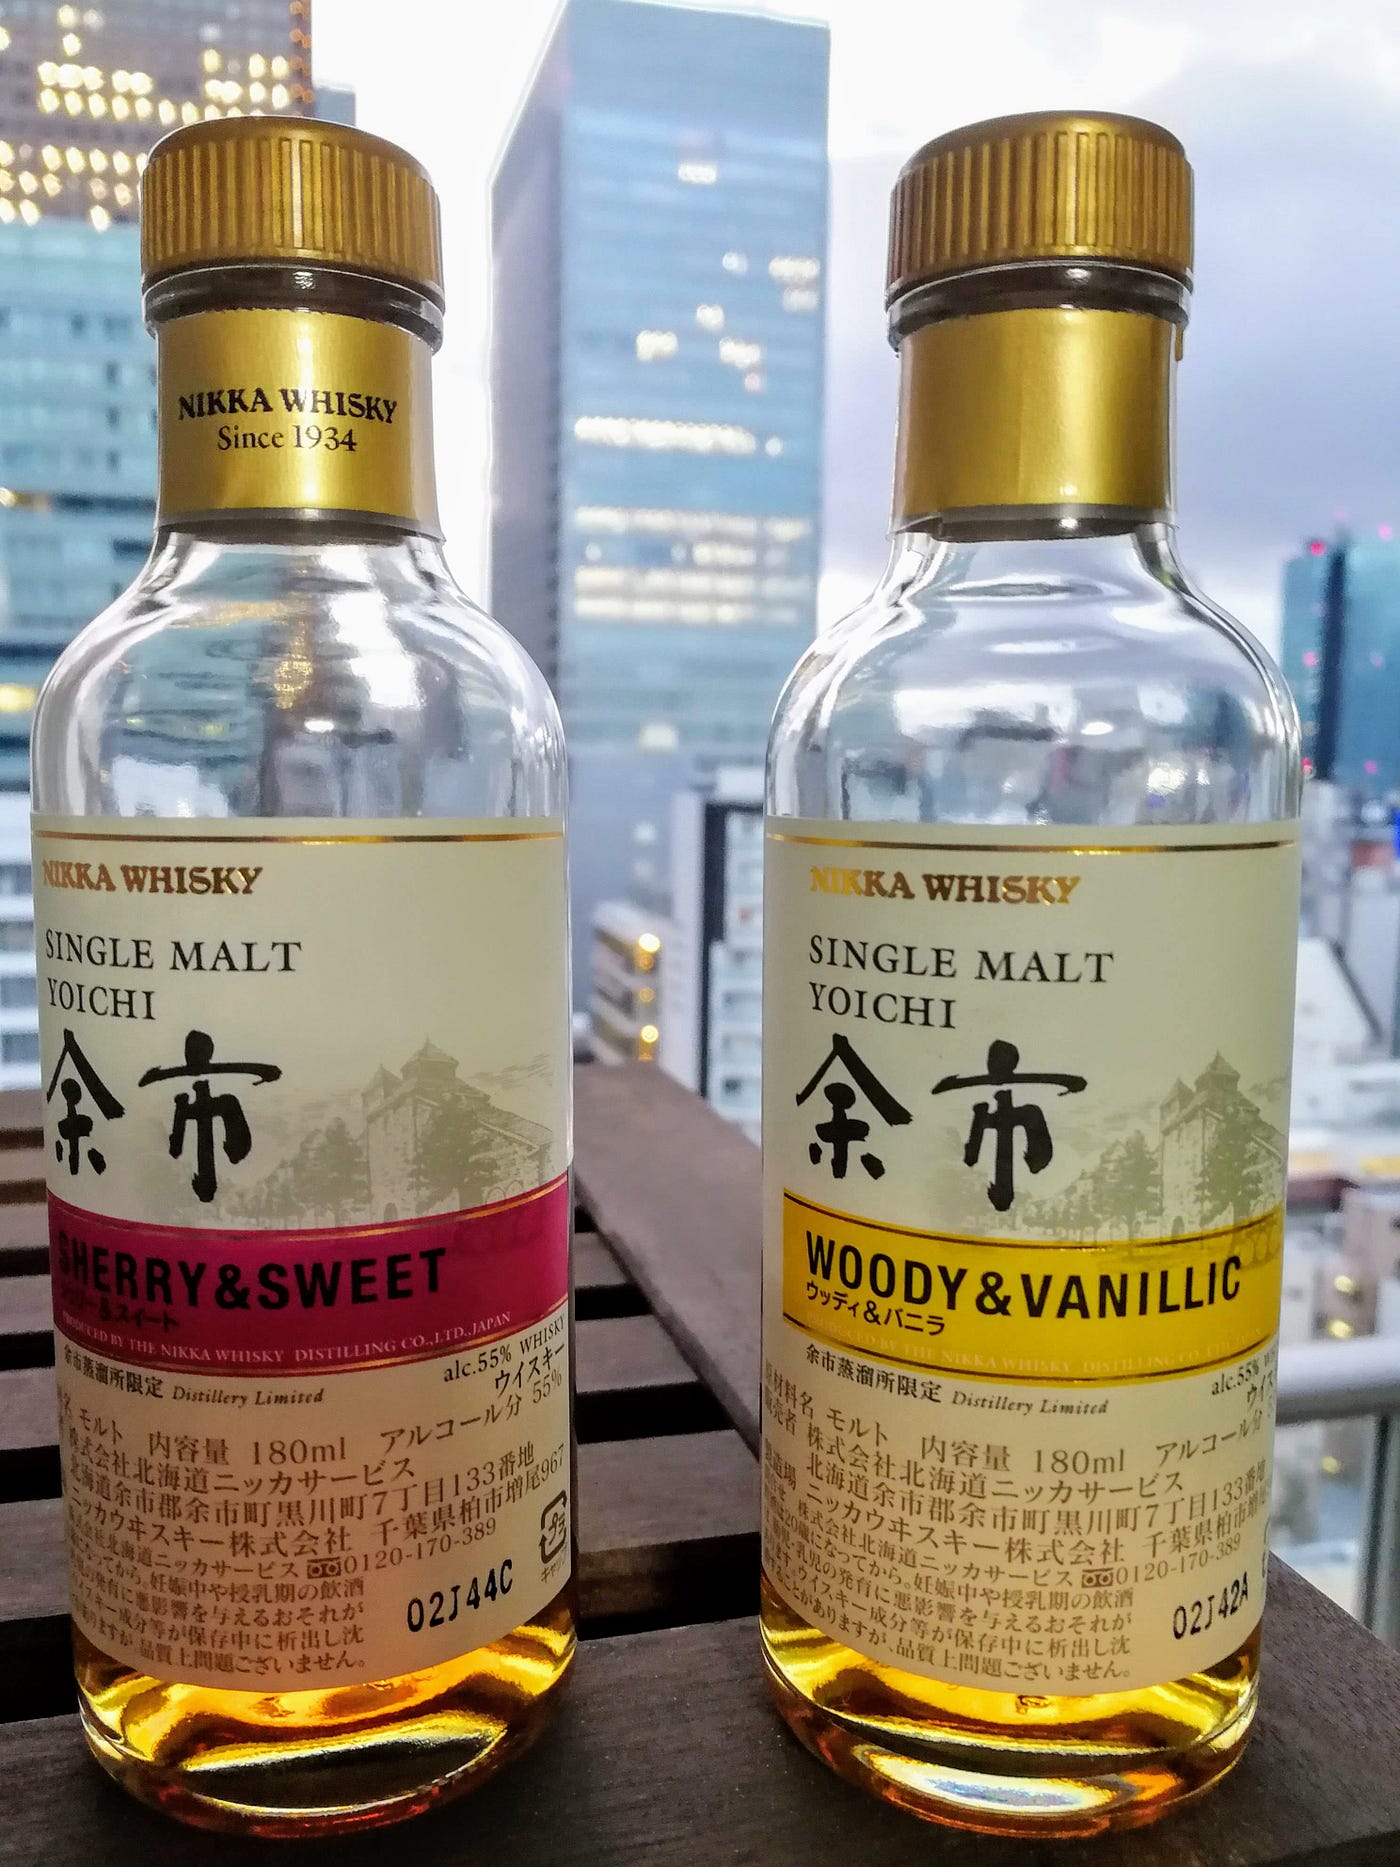 Japanese Whisky Review: Yoichi Woody & Vanillic, Sherry & Sweet